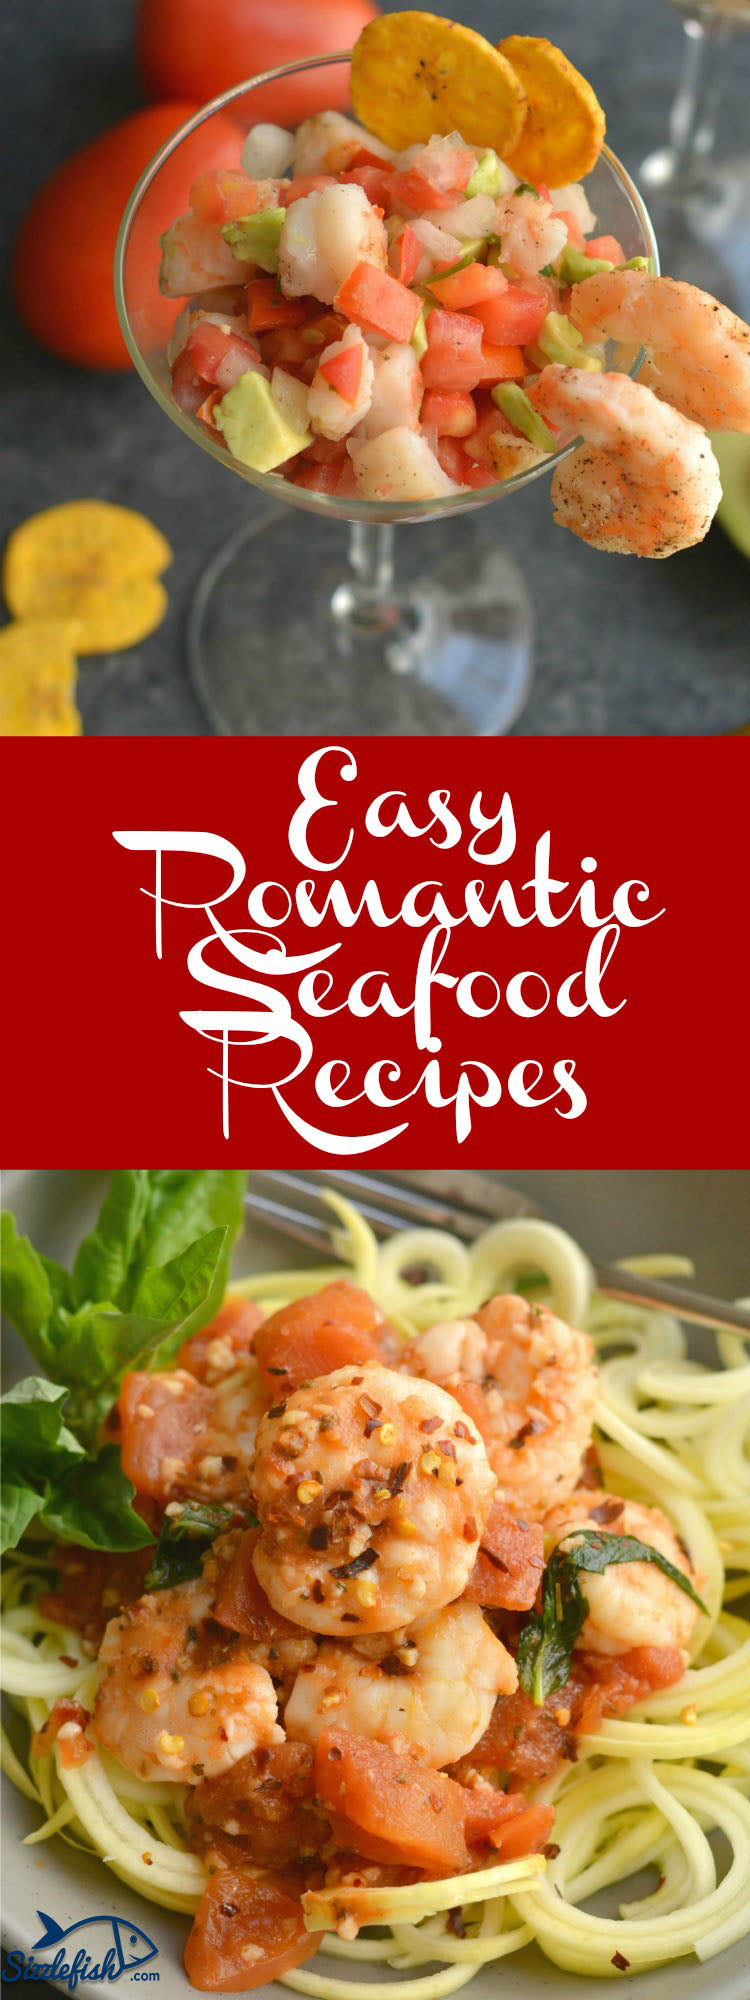 Easy Romantic Seafood Recipes